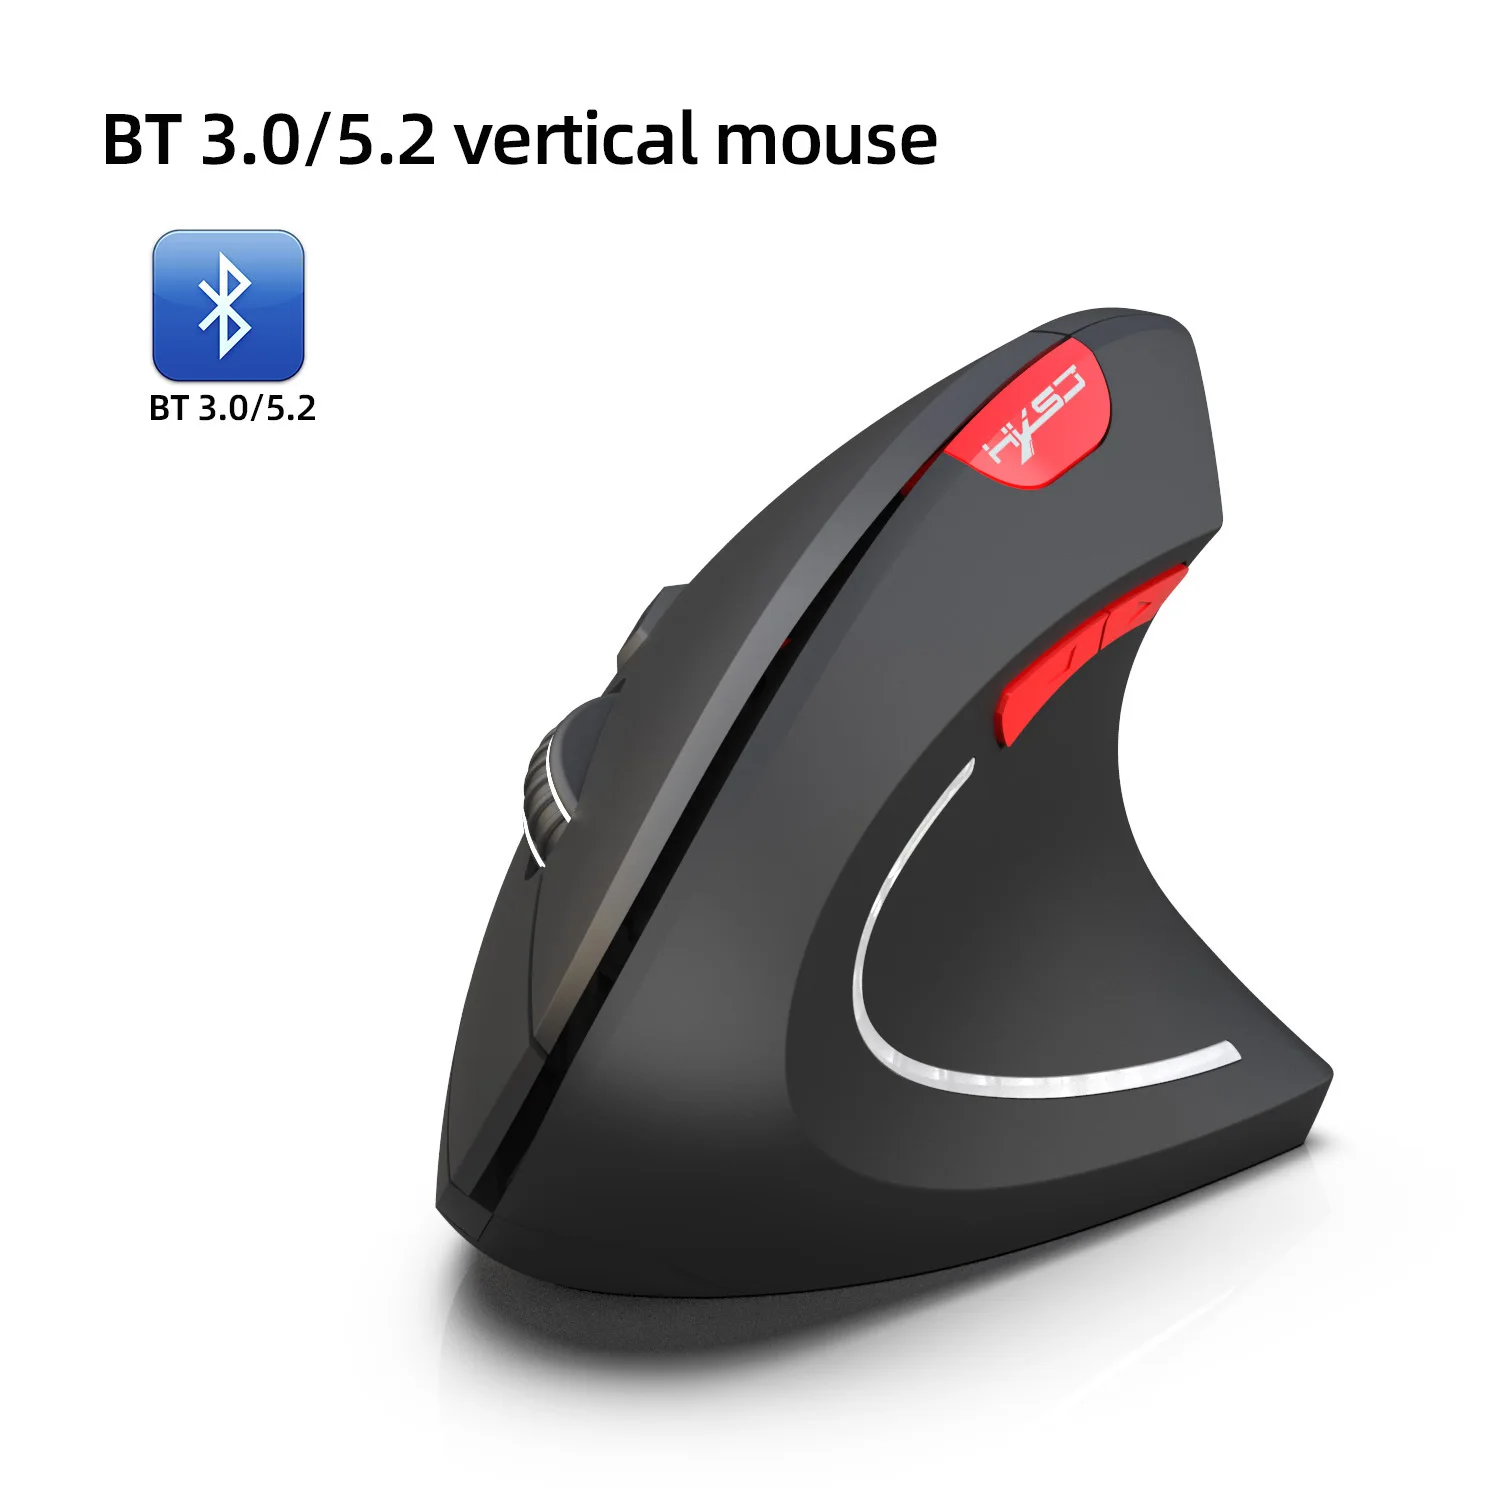 

HXSJ Wireless Mouse Vertical Mice Ergonomic 3 DPI optional Adjustable 2400 DPI Bluetooth 3.0 5.2 Mouse